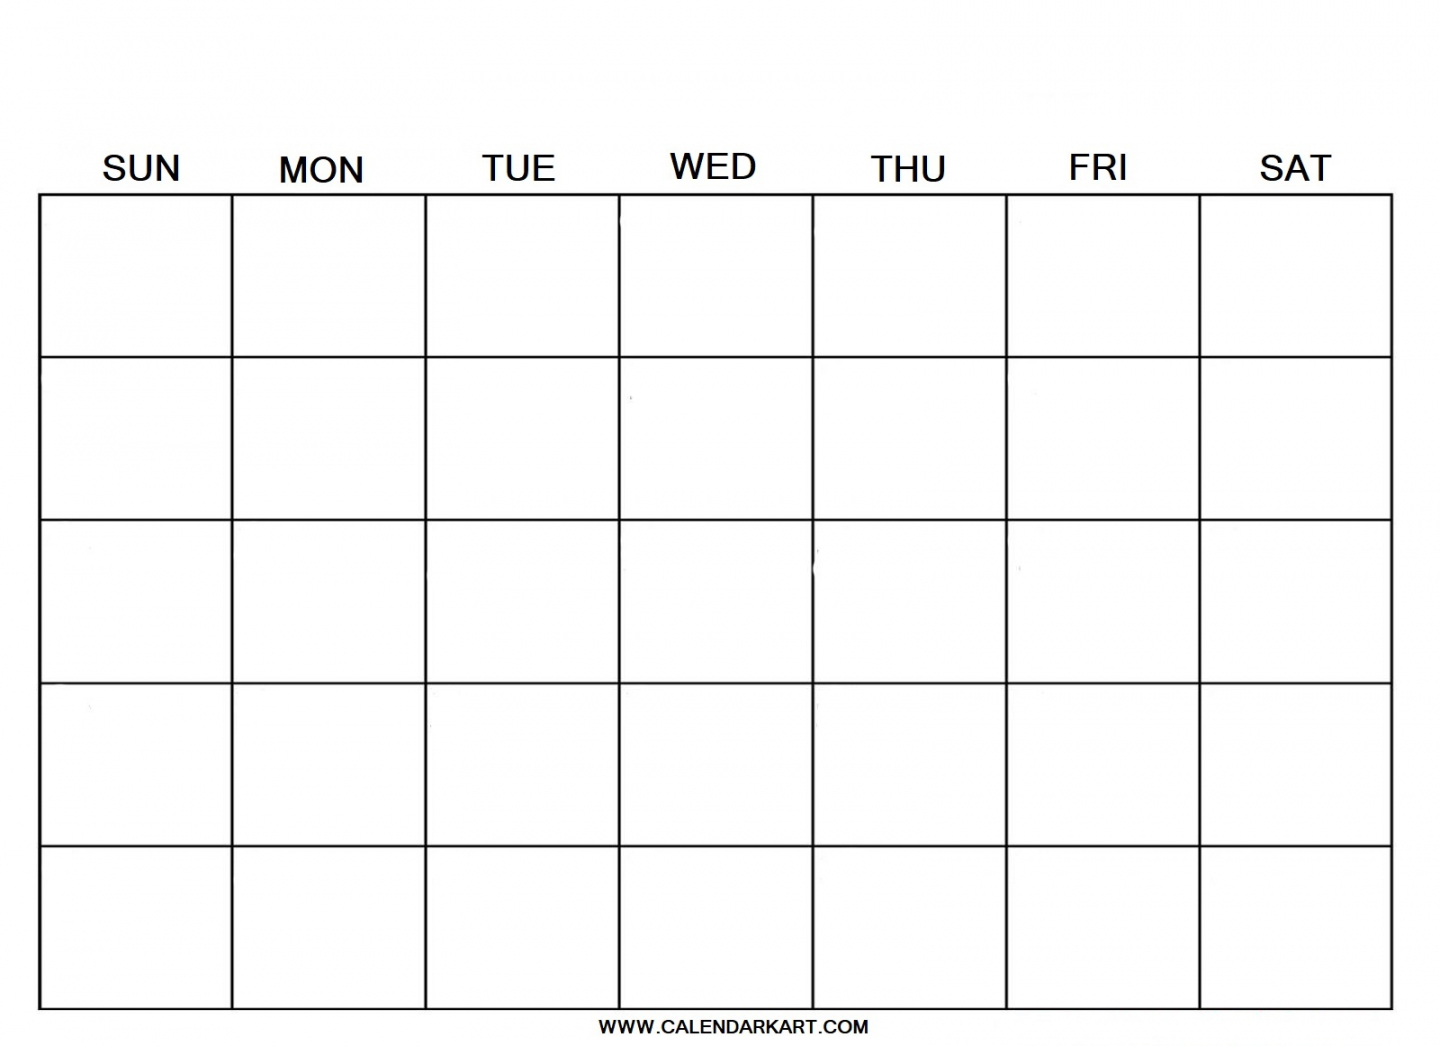 Free Blank Calendar Printable - Printable - Free Printable Blank Calendar Templates - CalendarKart